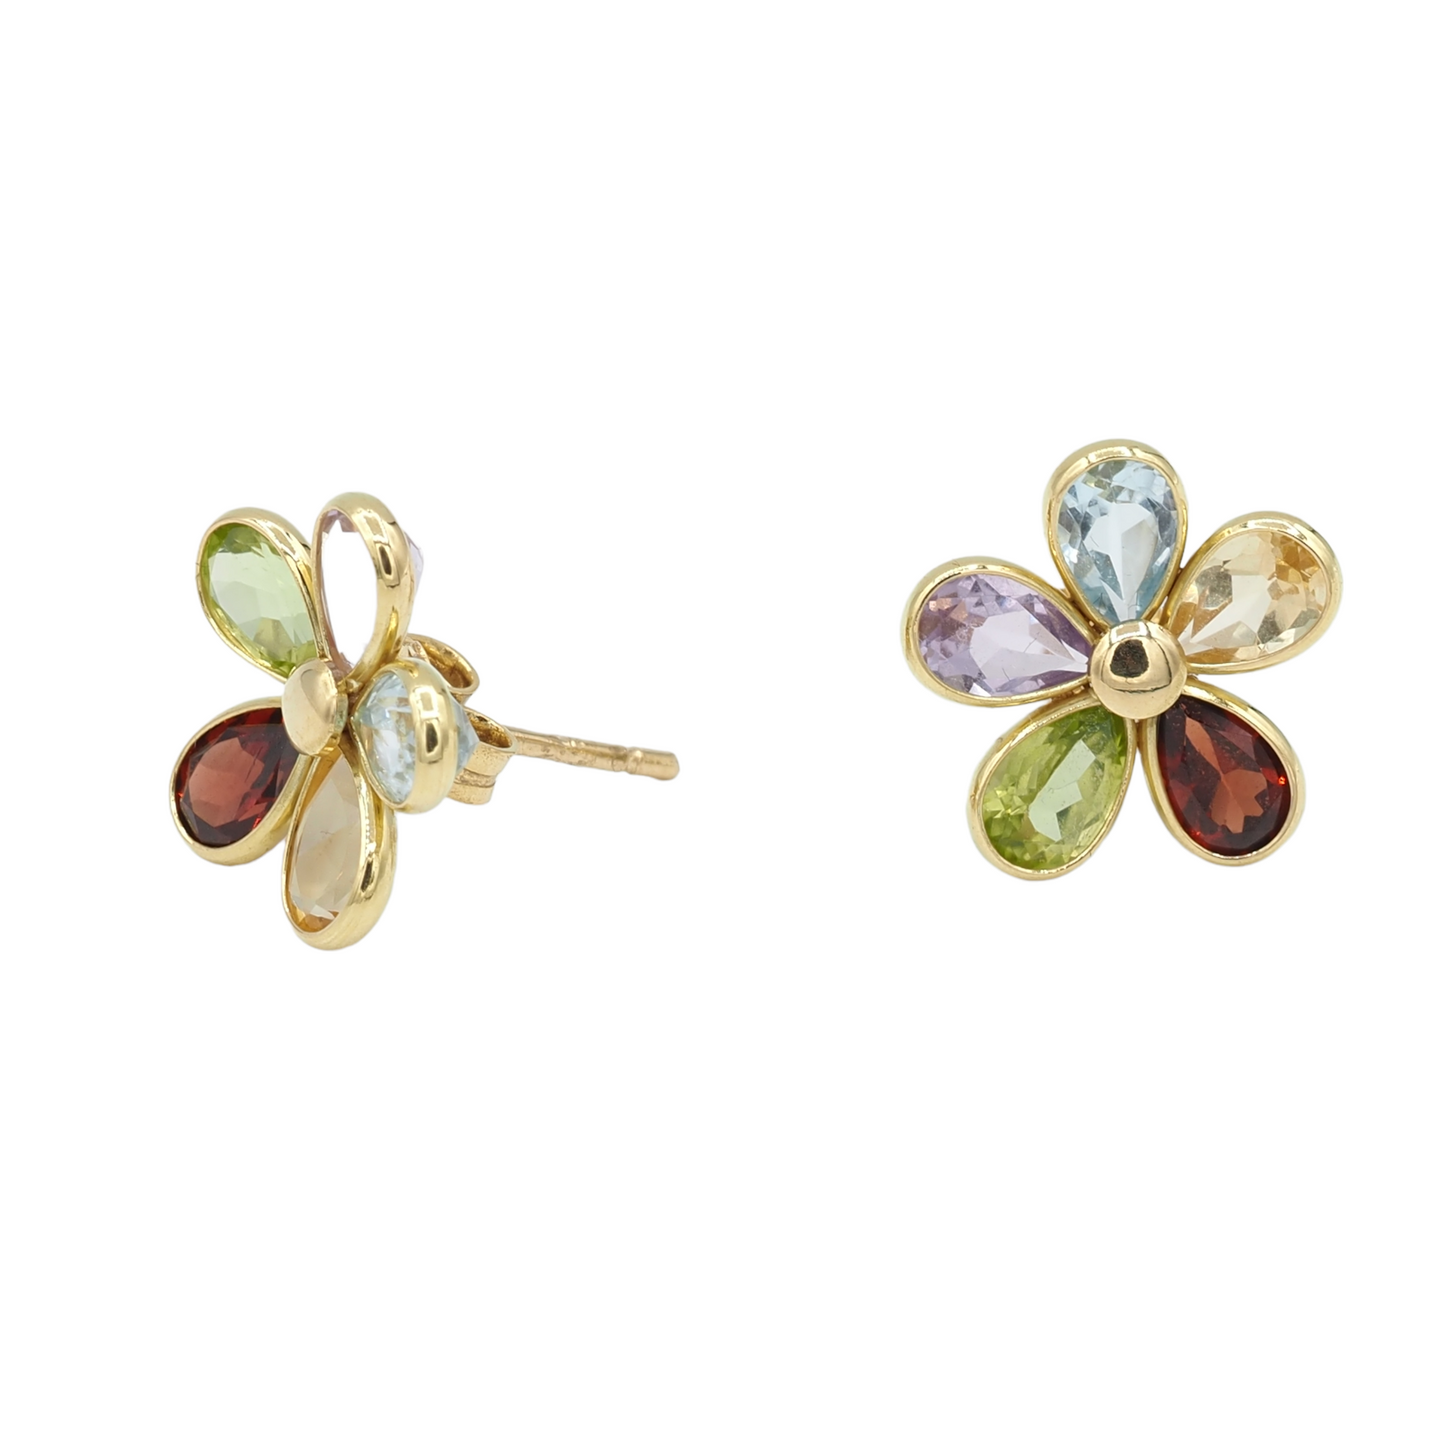 Multiflower earrings